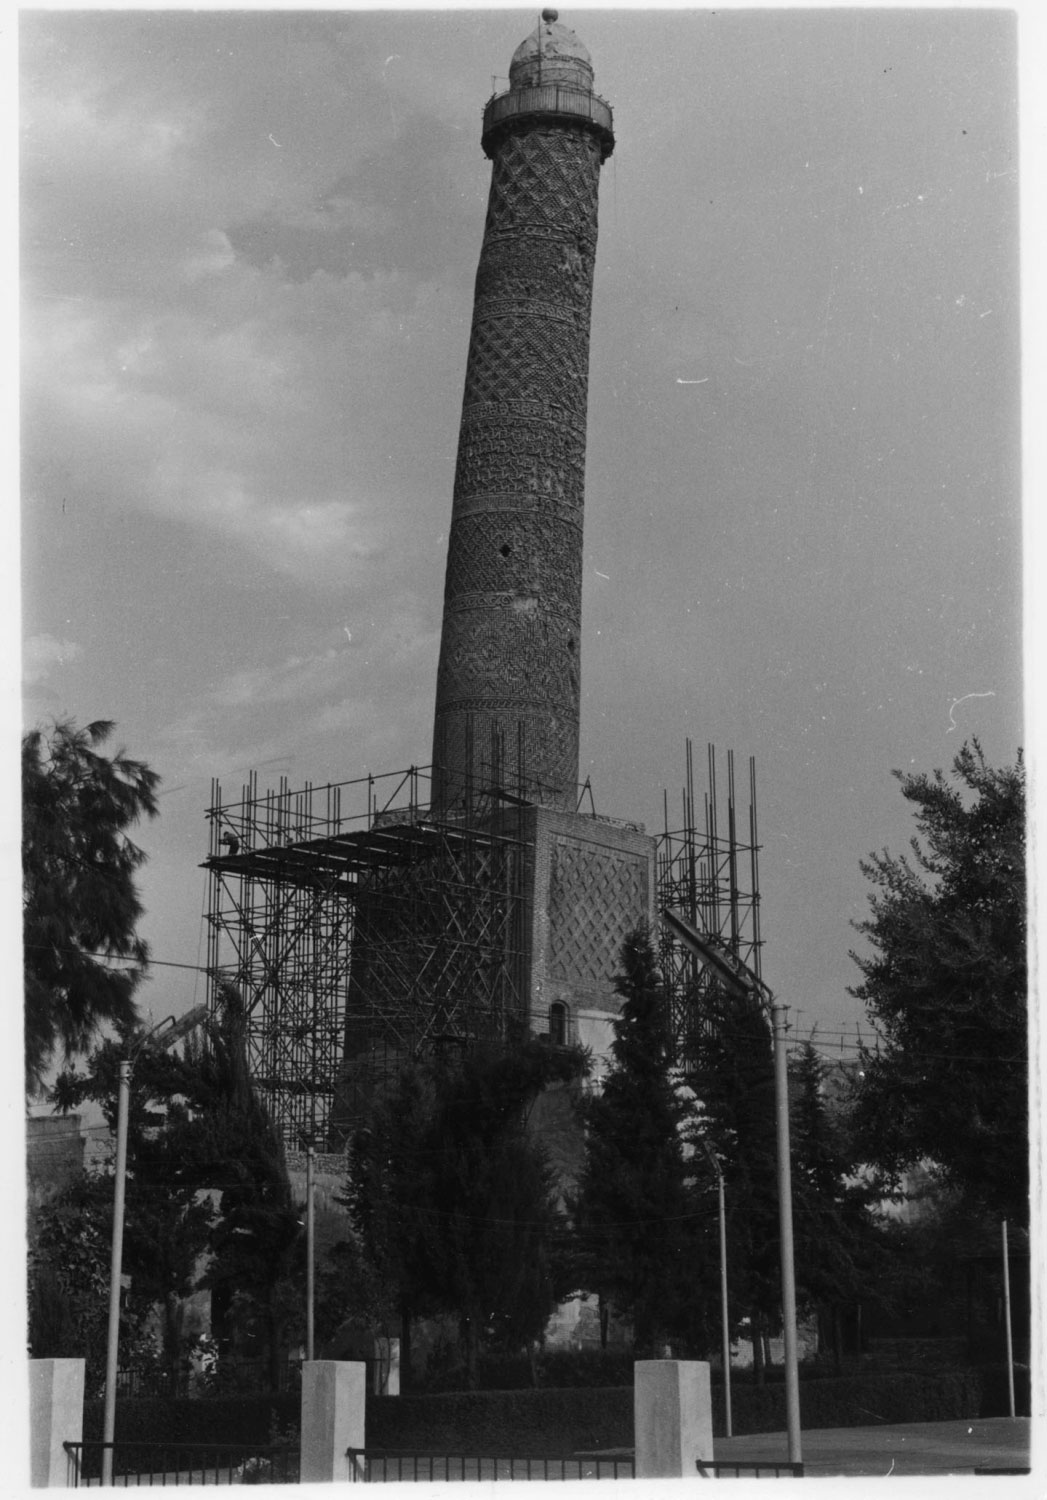 Exterior view of the minaret.